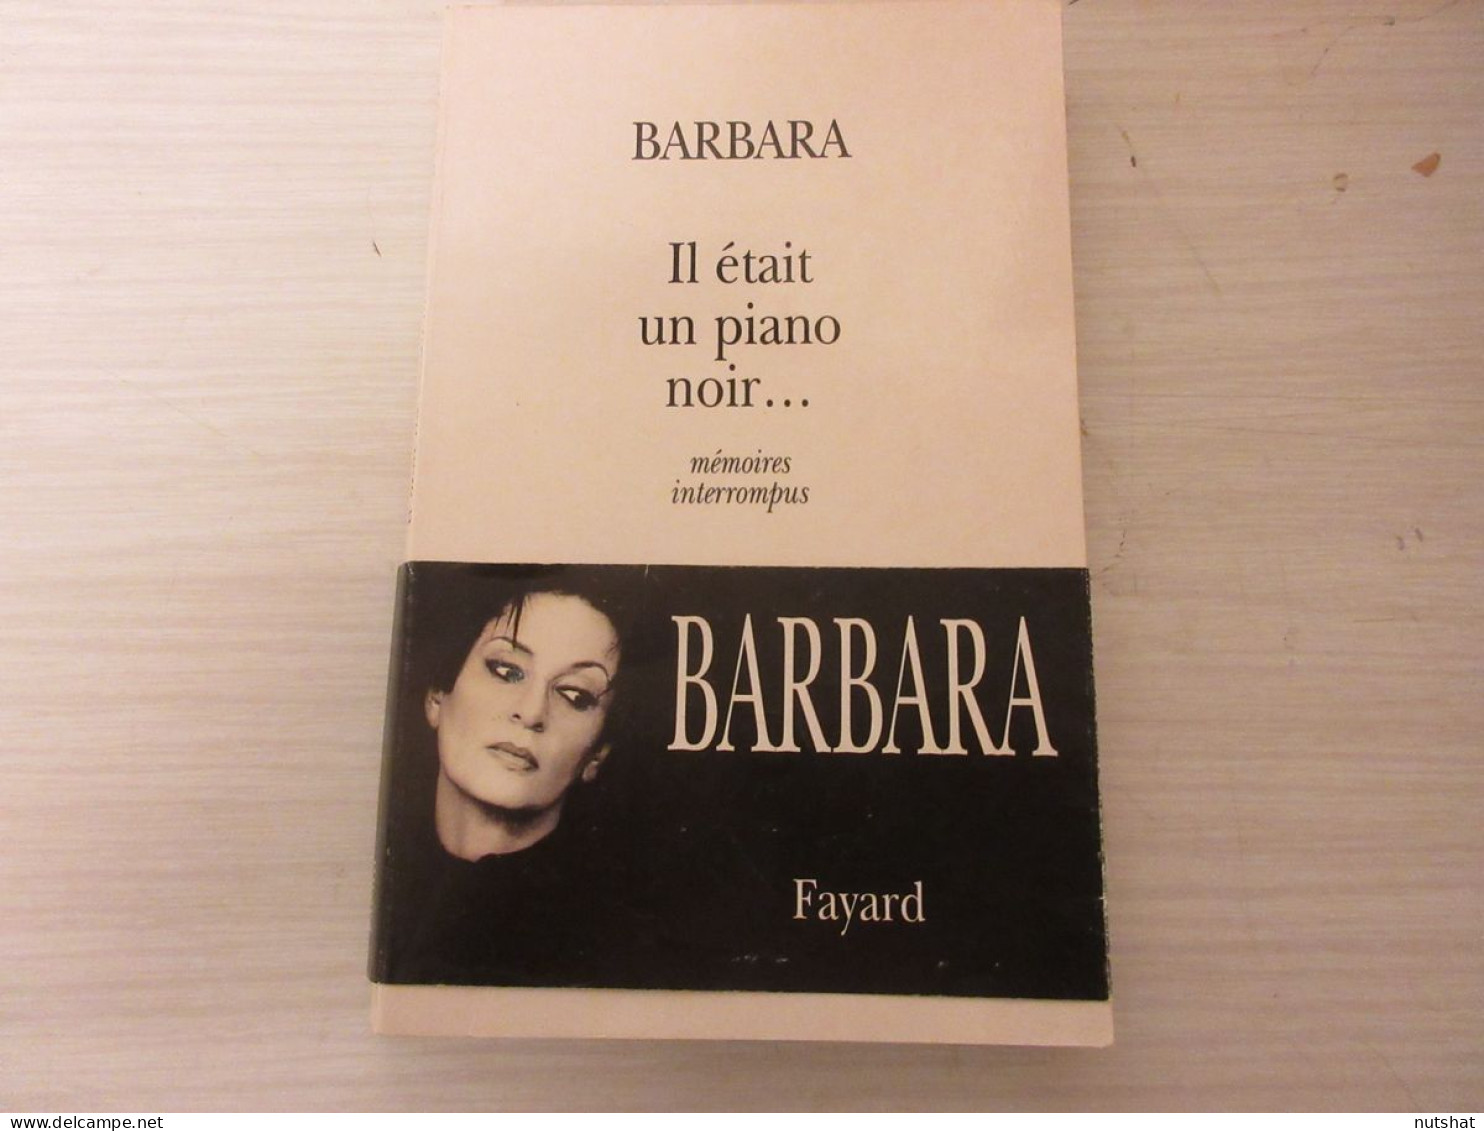 LIVRE MUSIQUE BARBARA IL ETAIT UN PIANO NOIR... MEMOIRES INTERROMPUS 1998 230p.  - Musique